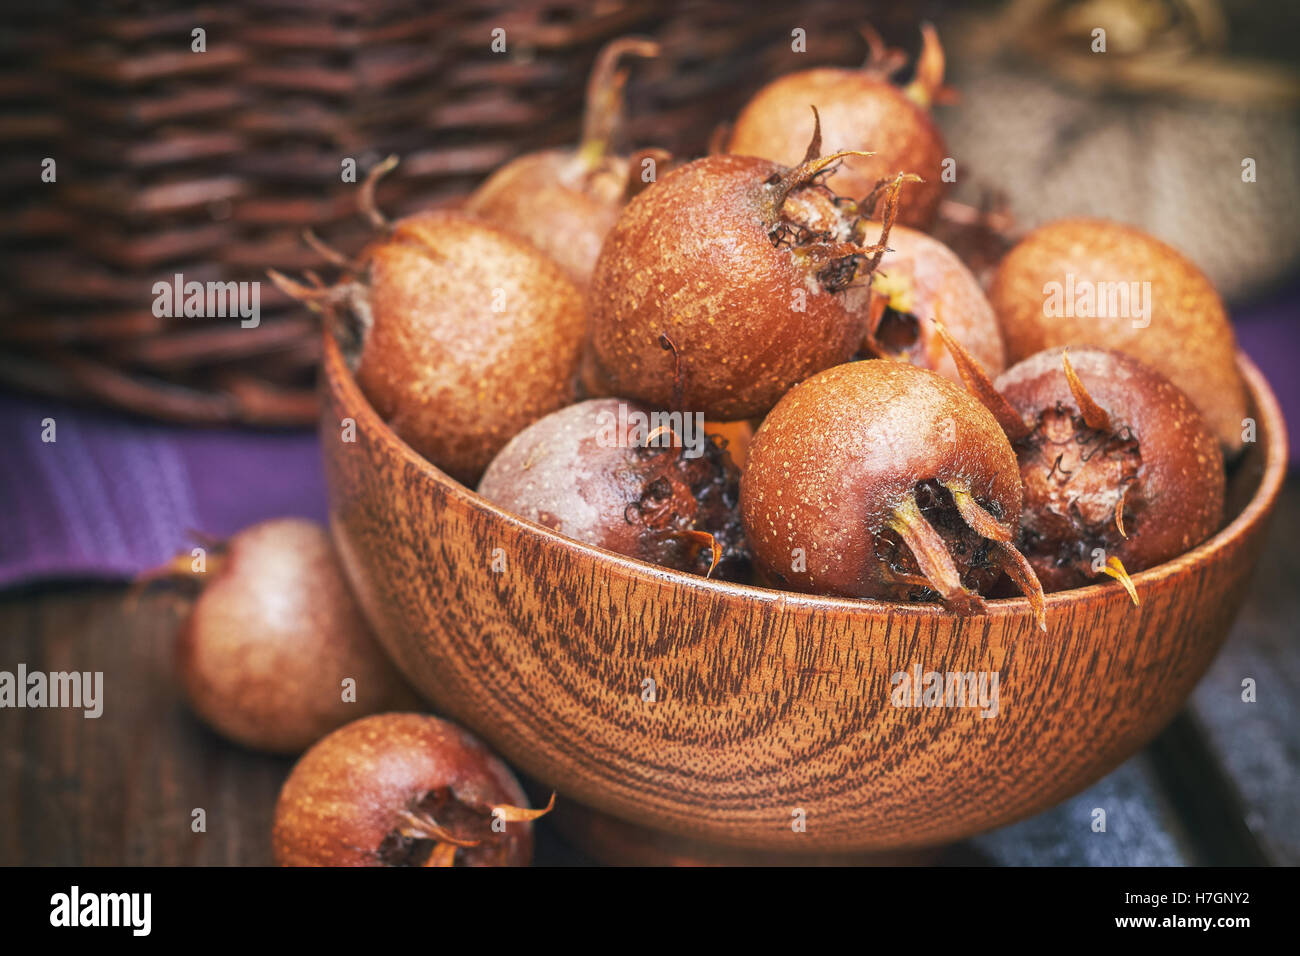 Common medlar fruit (mispel) in wooden bowl Stock Photo